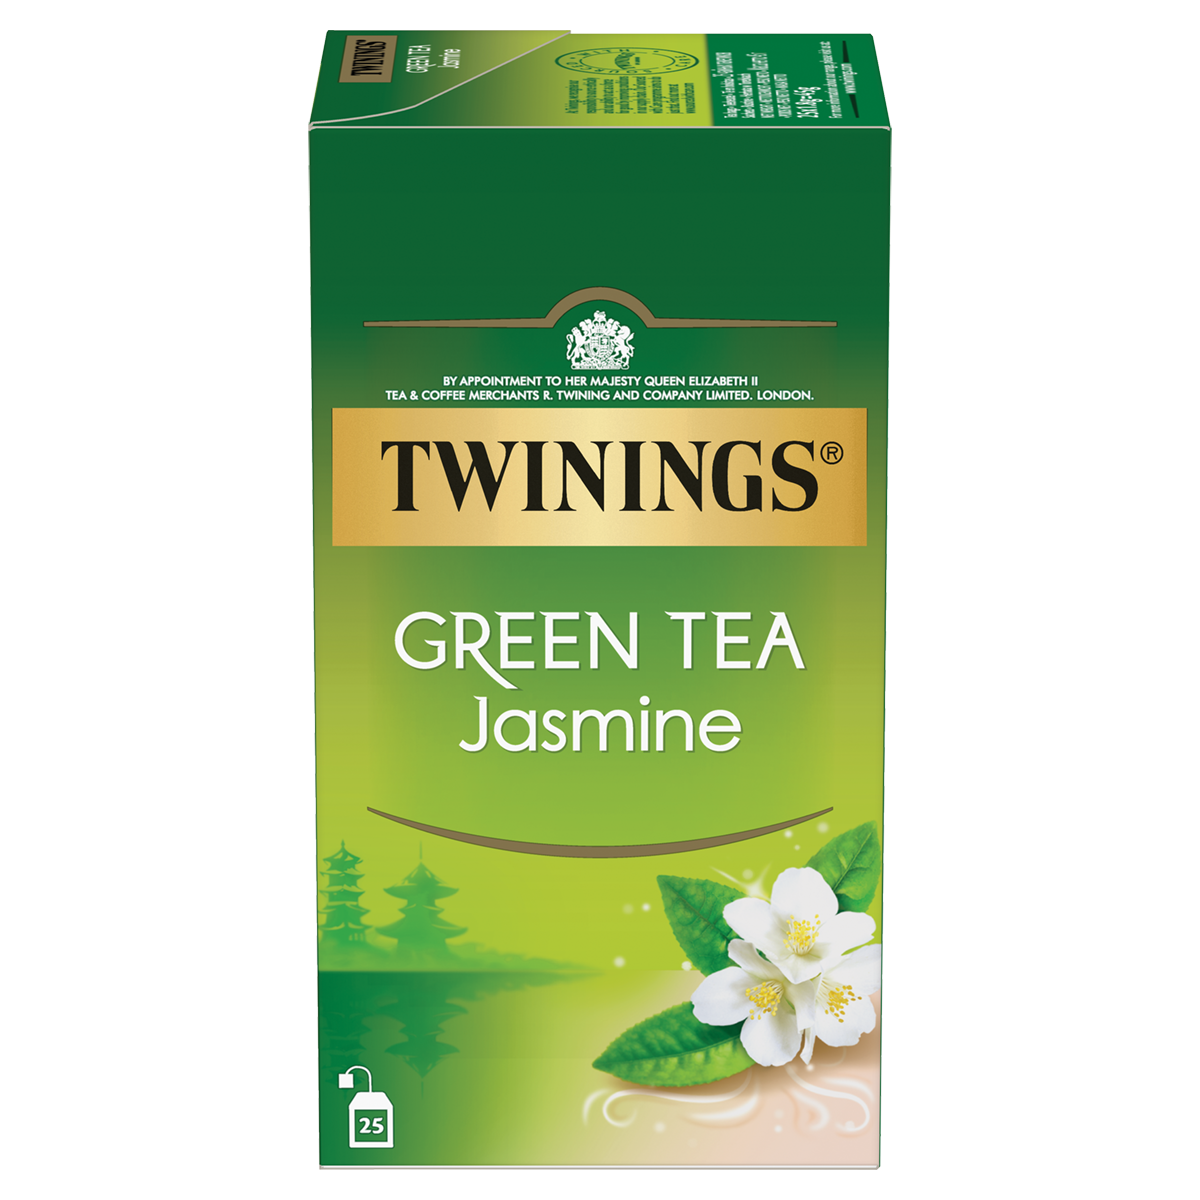  Green Tea Jasmine - der delikate Grüntee